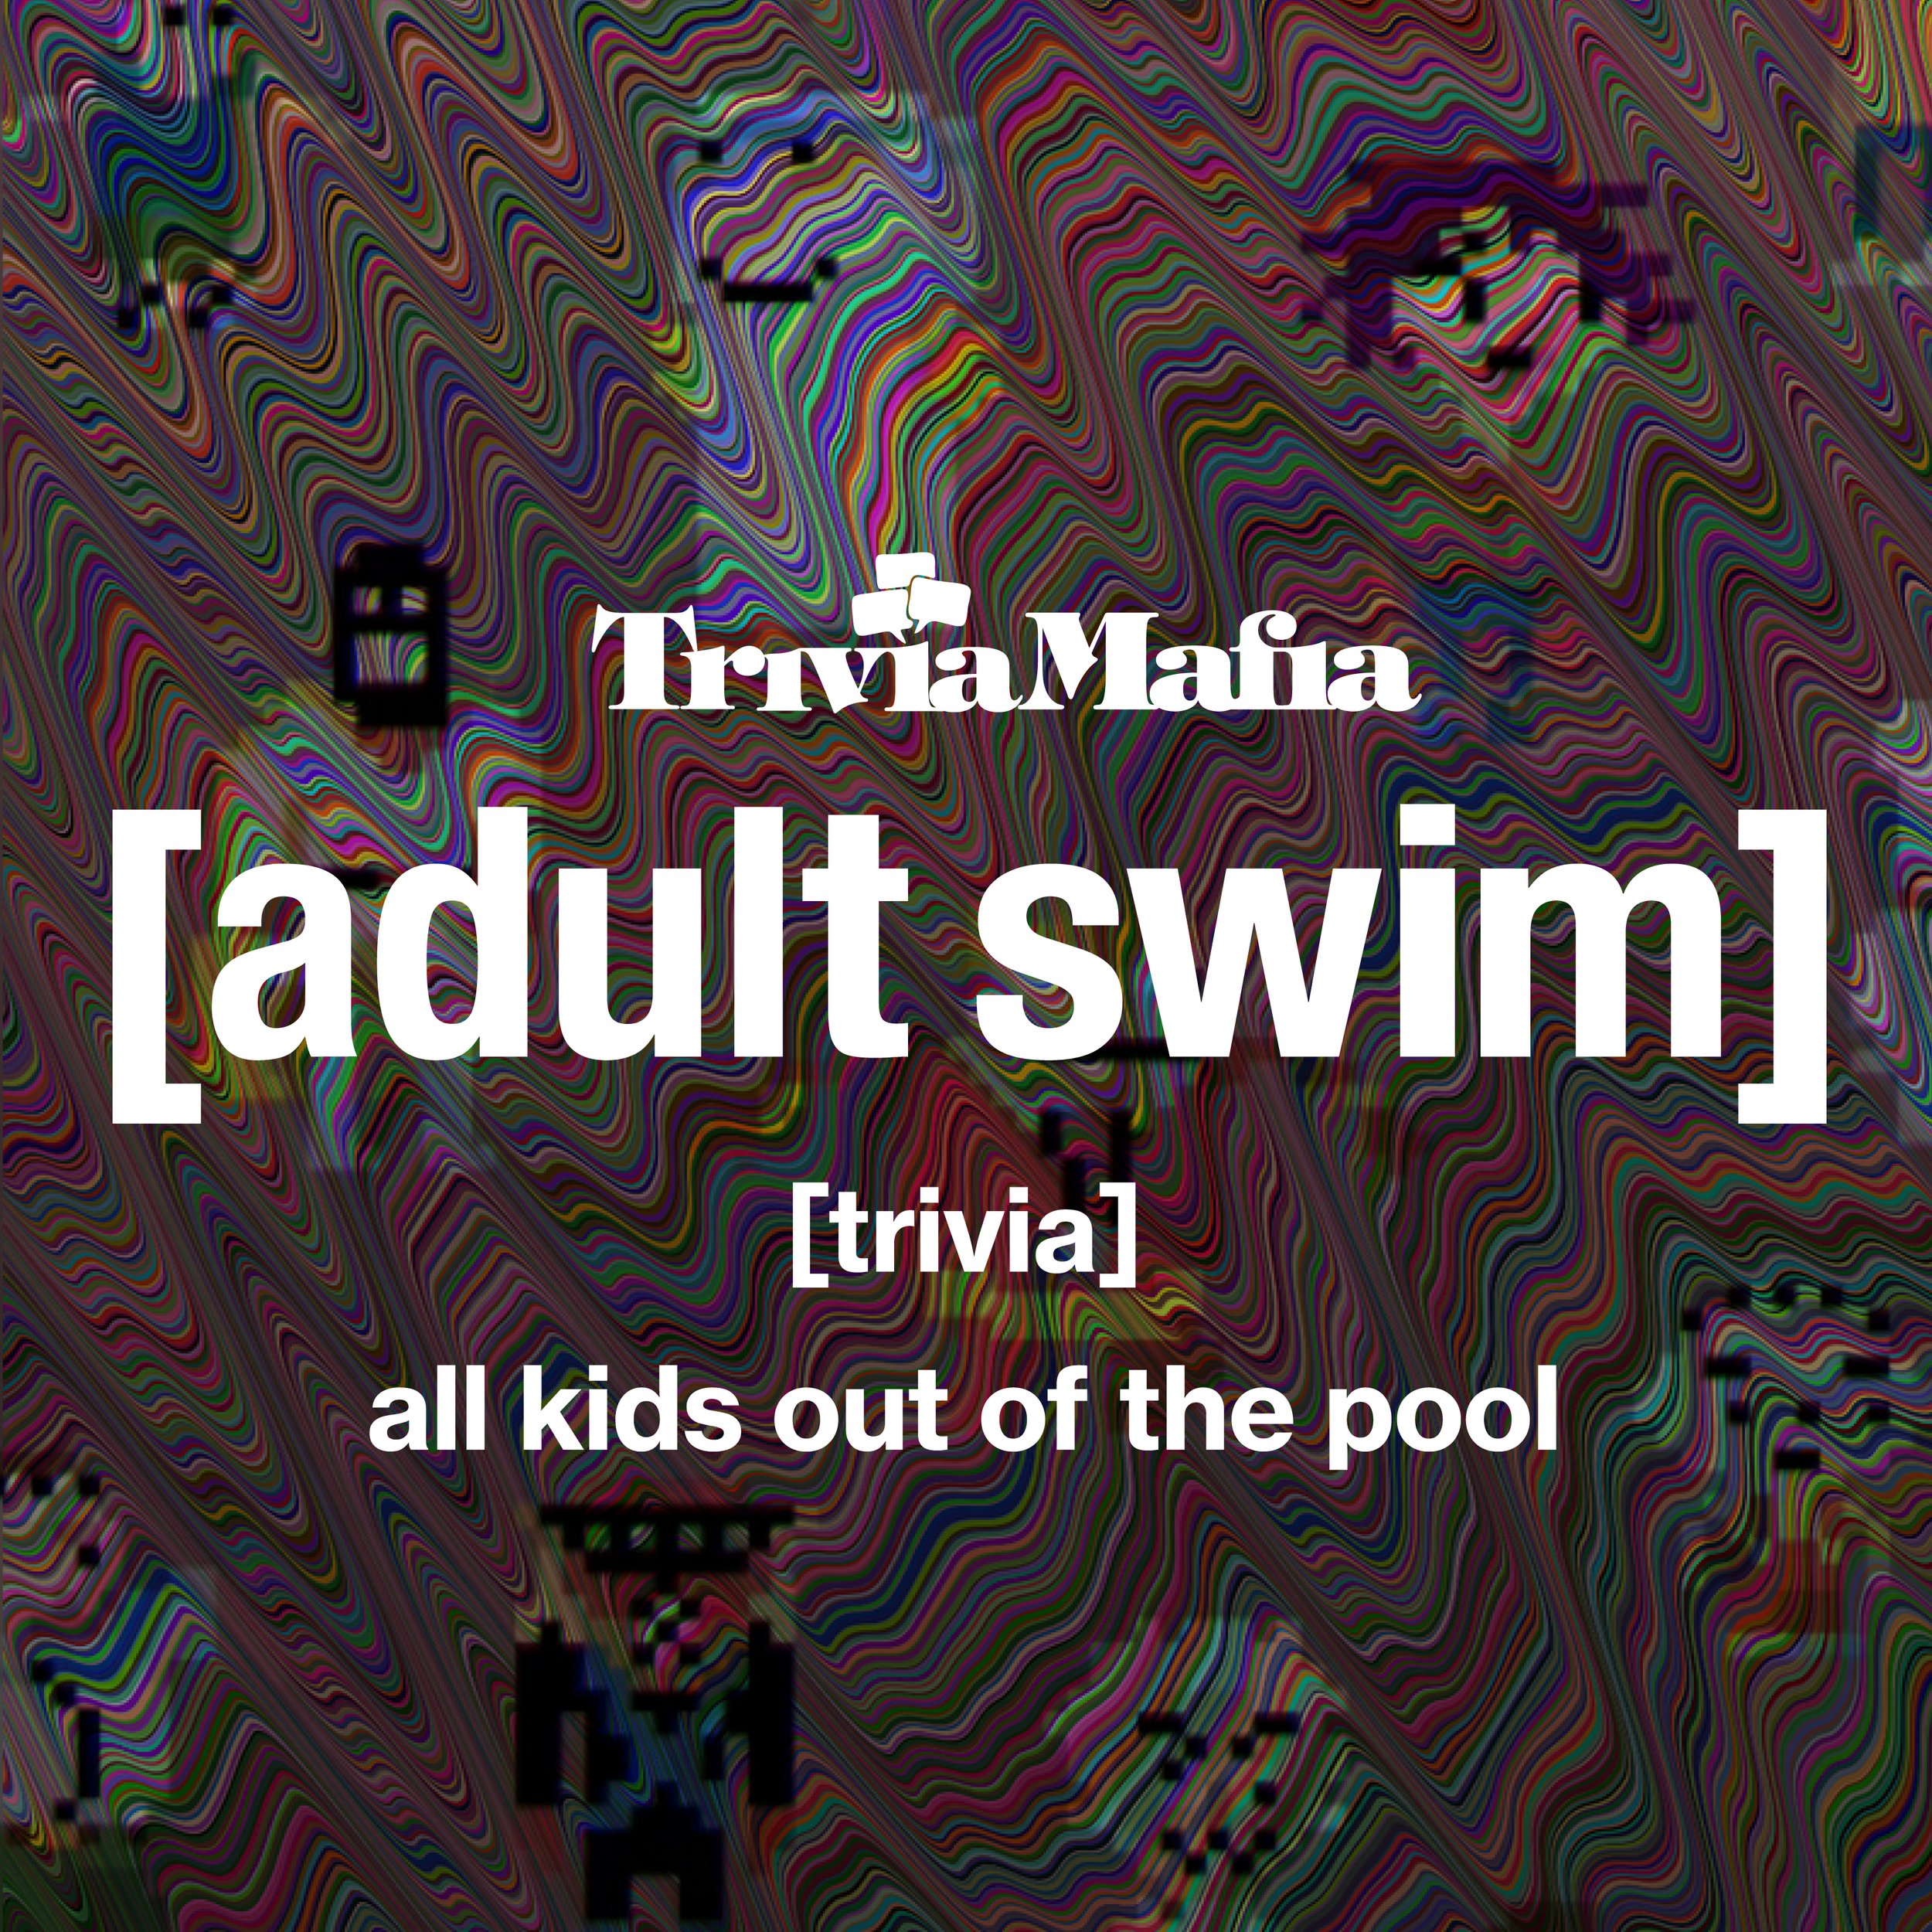 TM_Adult Swim Trivia Assets-02 FINAL.jpg